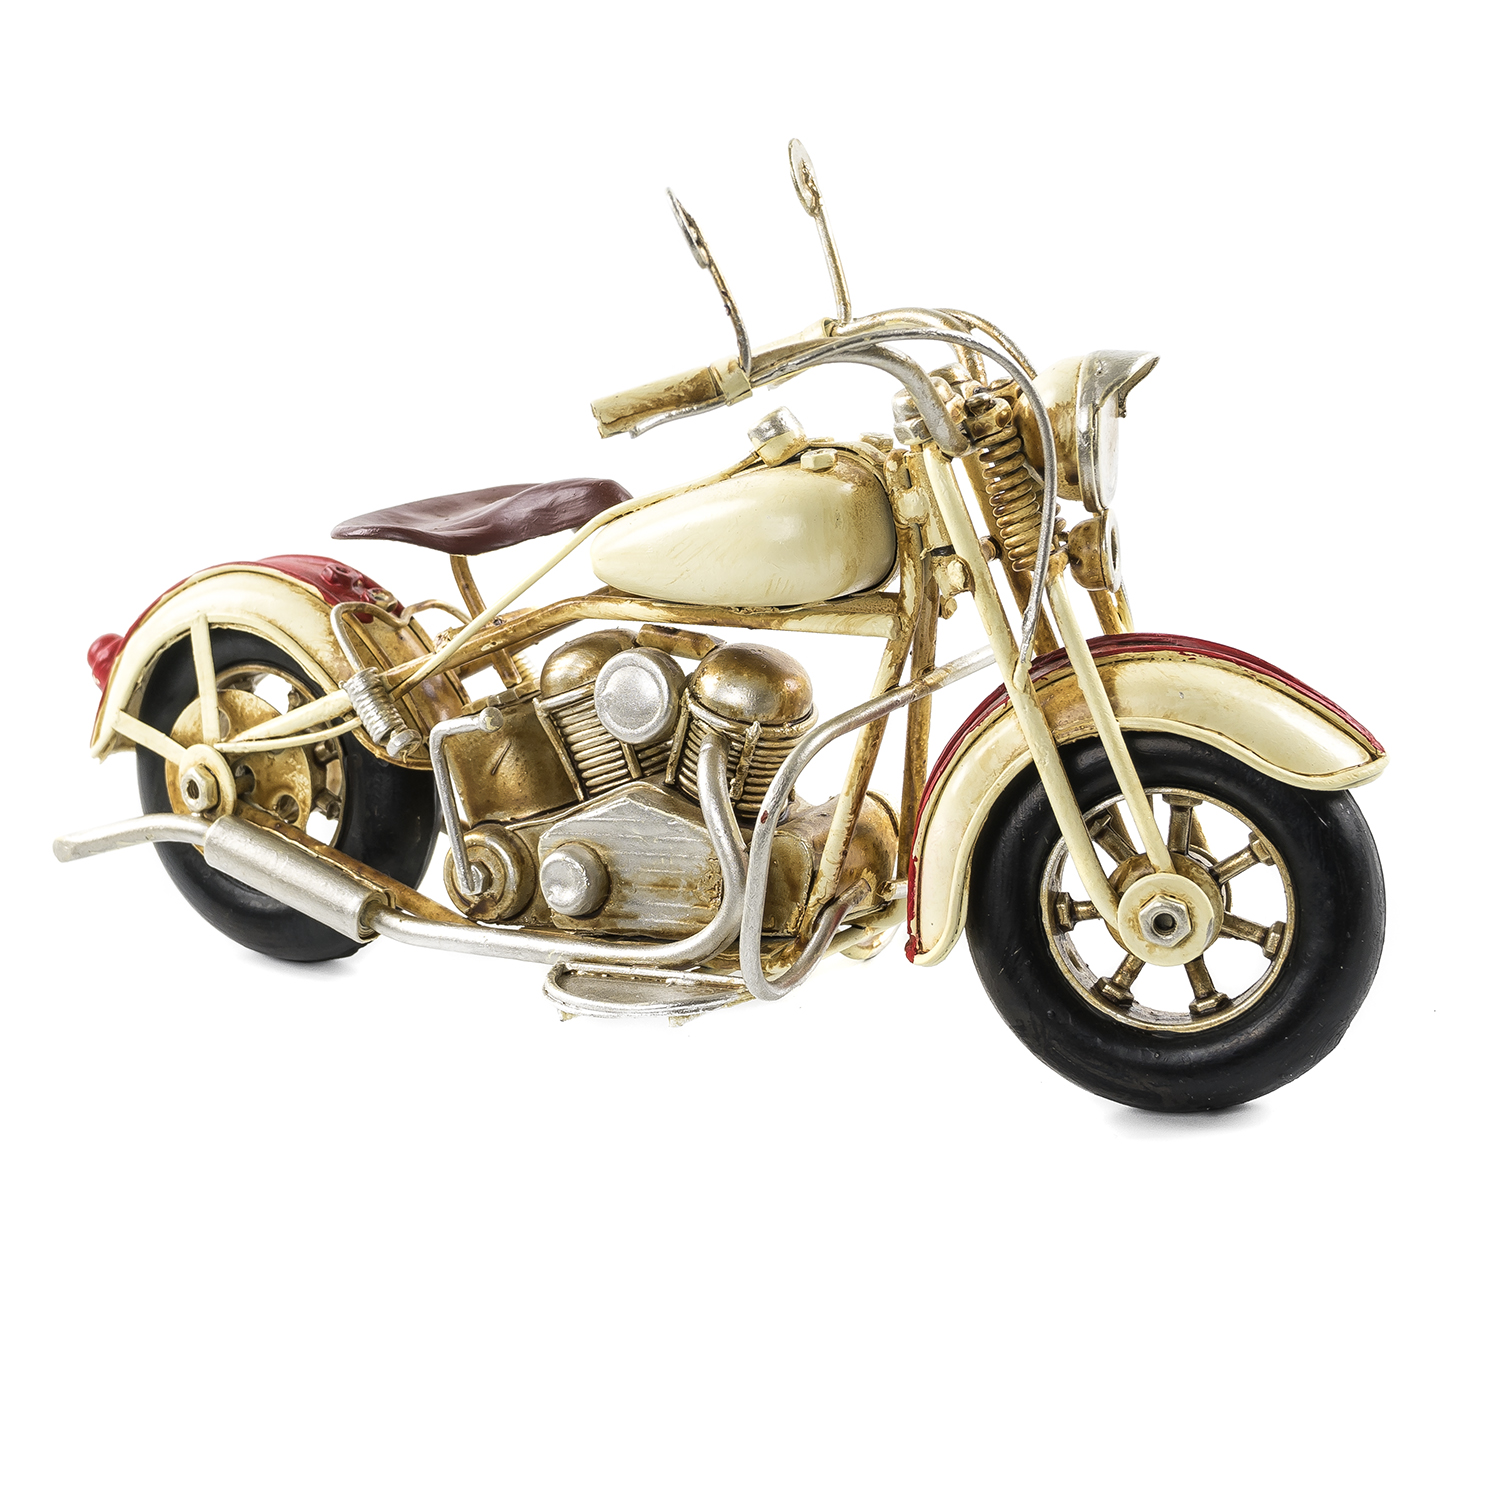 Декоративная модель Мотоцикла — Байка, сувенир,  20х13х9 см, Металл, 26005